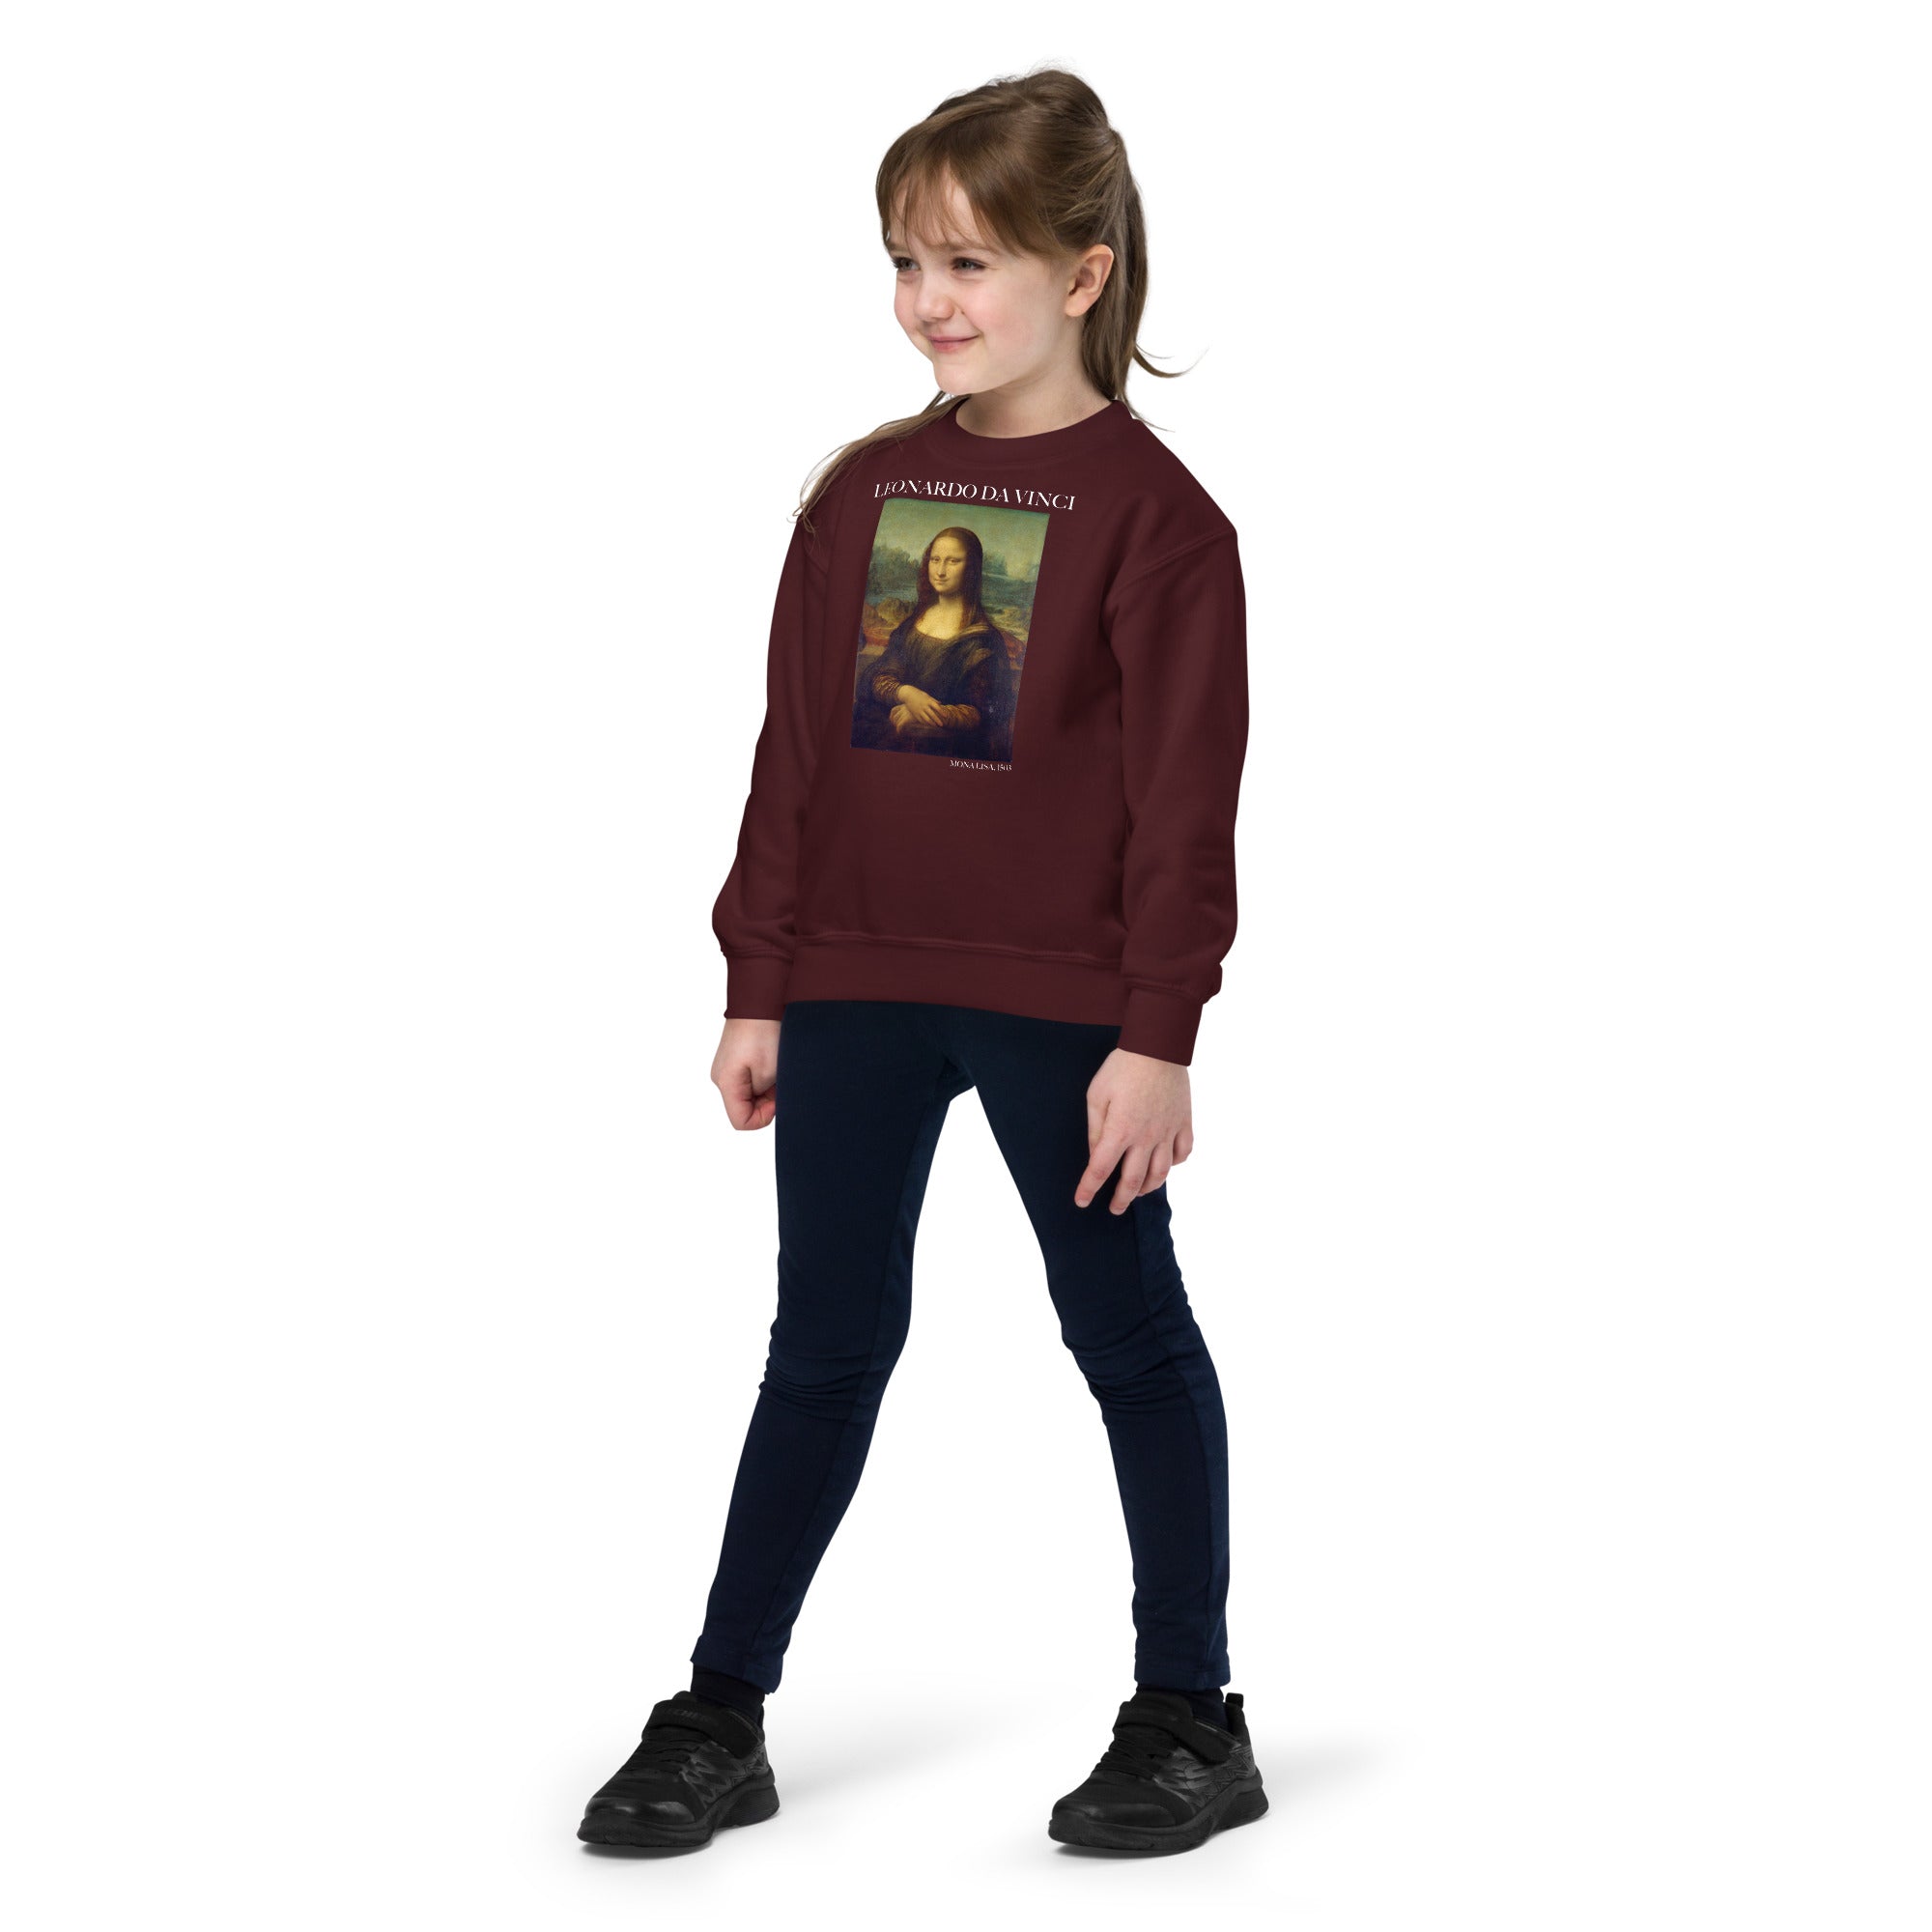 Leonardo da Vinci 'Mona Lisa' Famous Painting Crewneck Sweatshirt | Premium Youth Art Sweatshirt